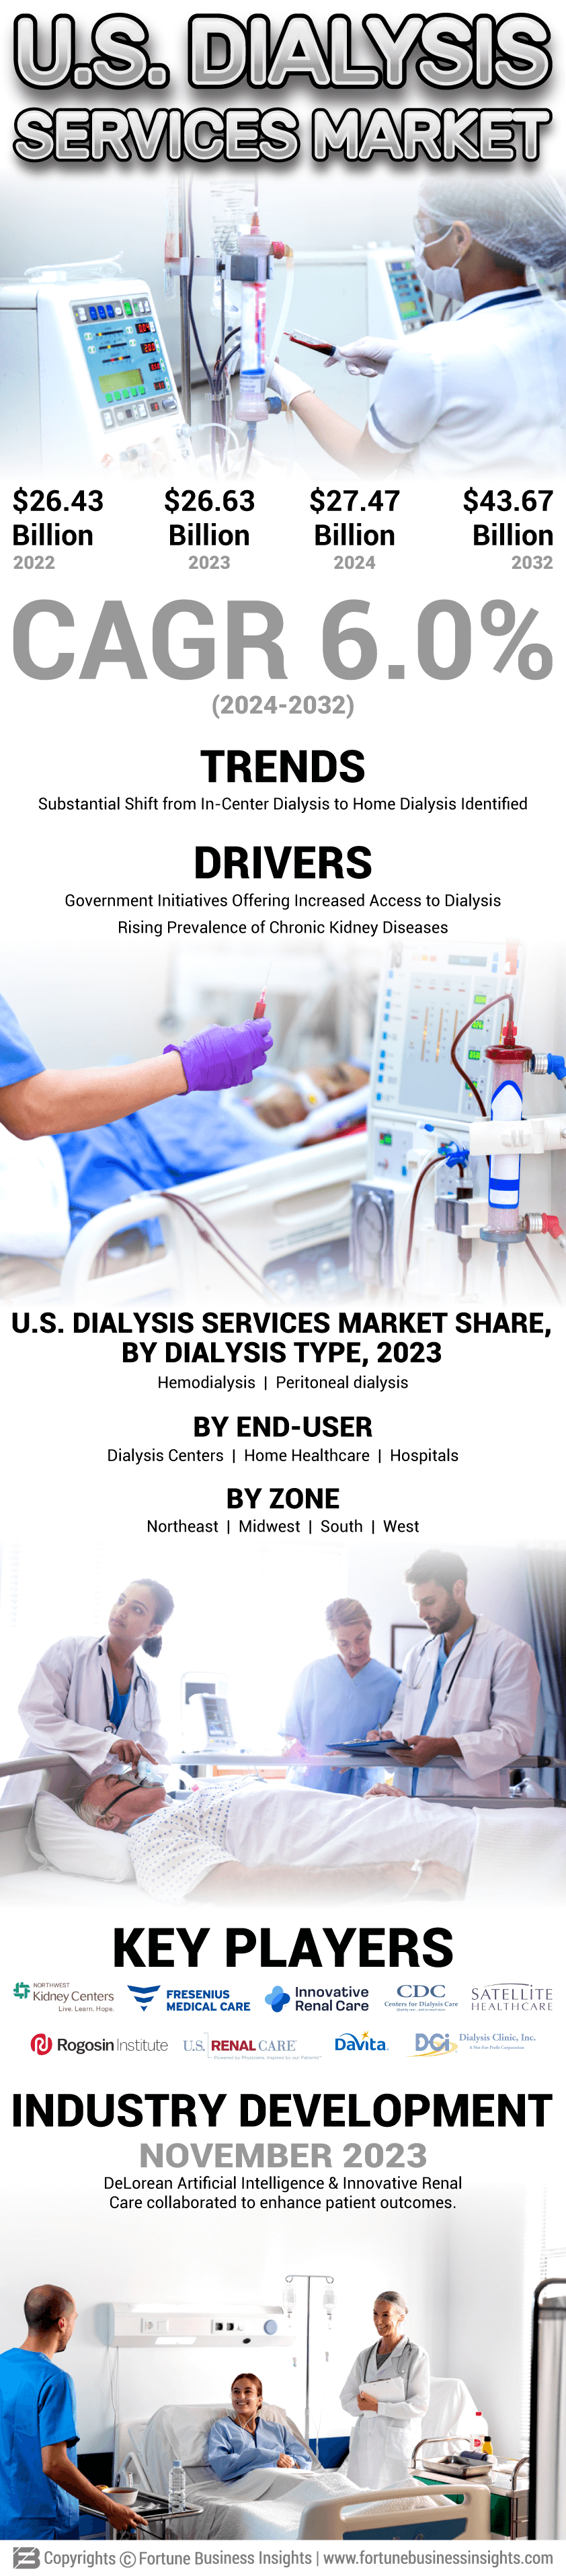 U.S. Dialysis Services Market